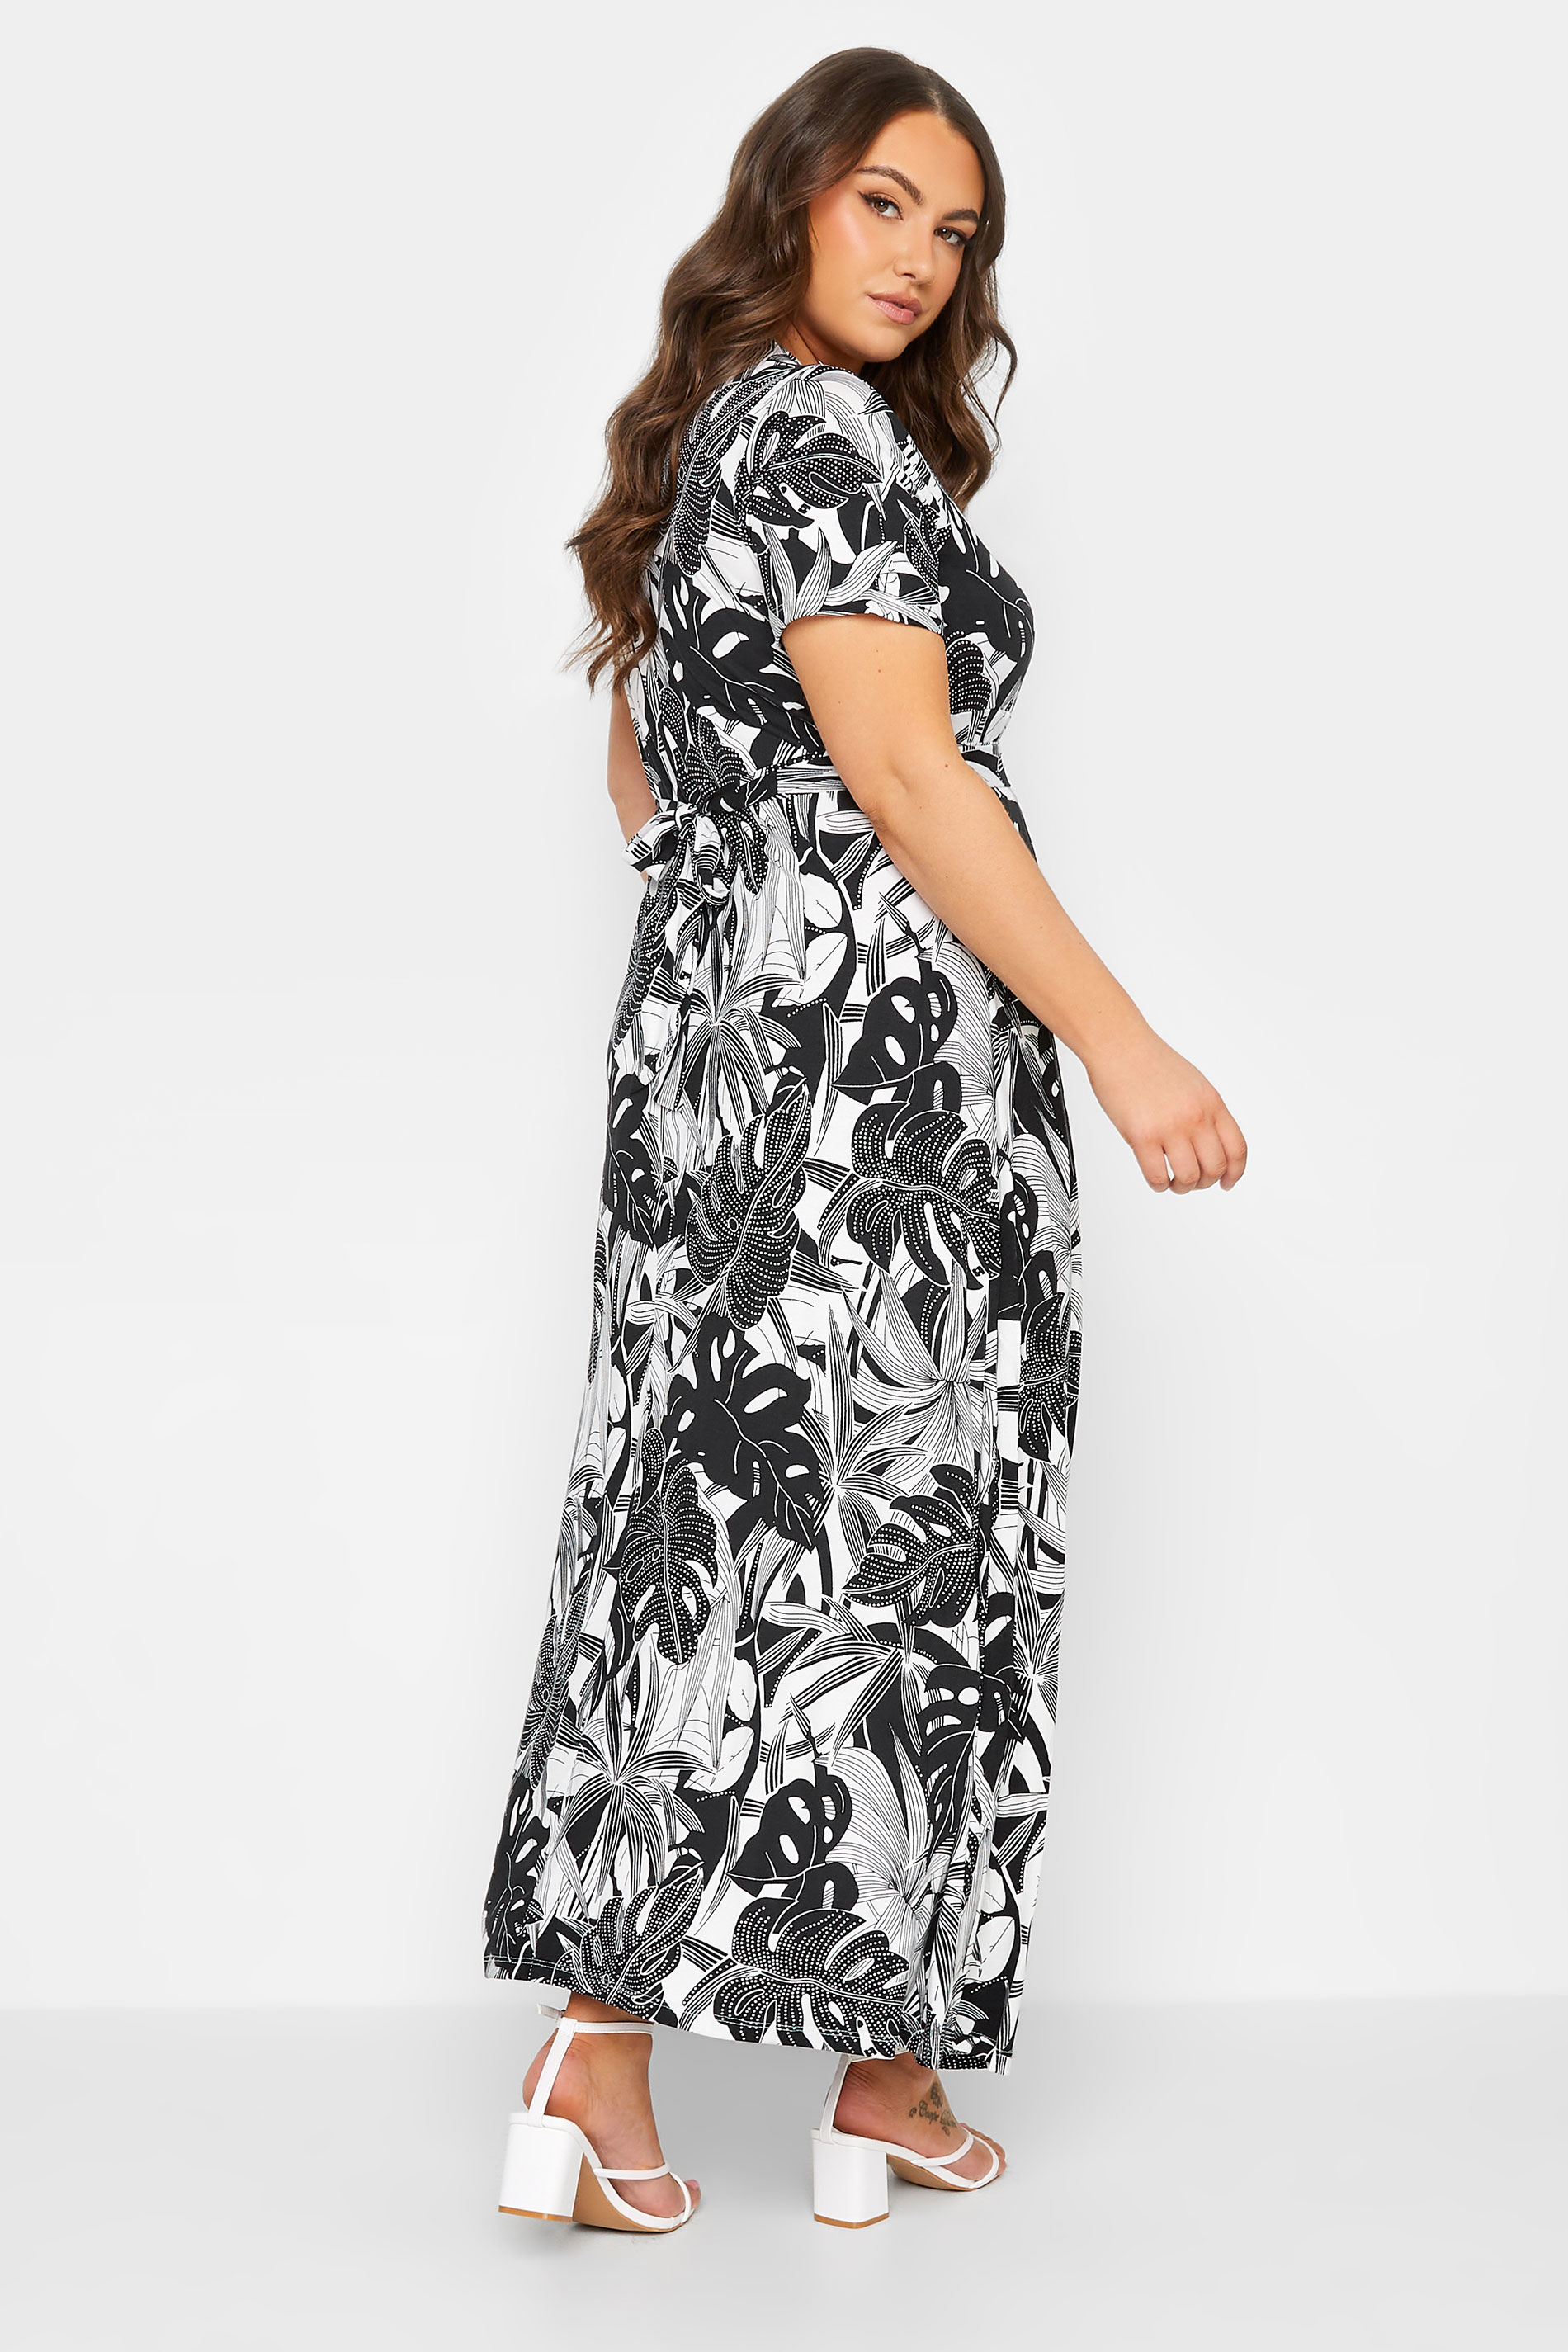 YOURS Plus Size Curve Black & White Floral Leaf Print Front Tie Maxi Dress| Yours Clothing  3